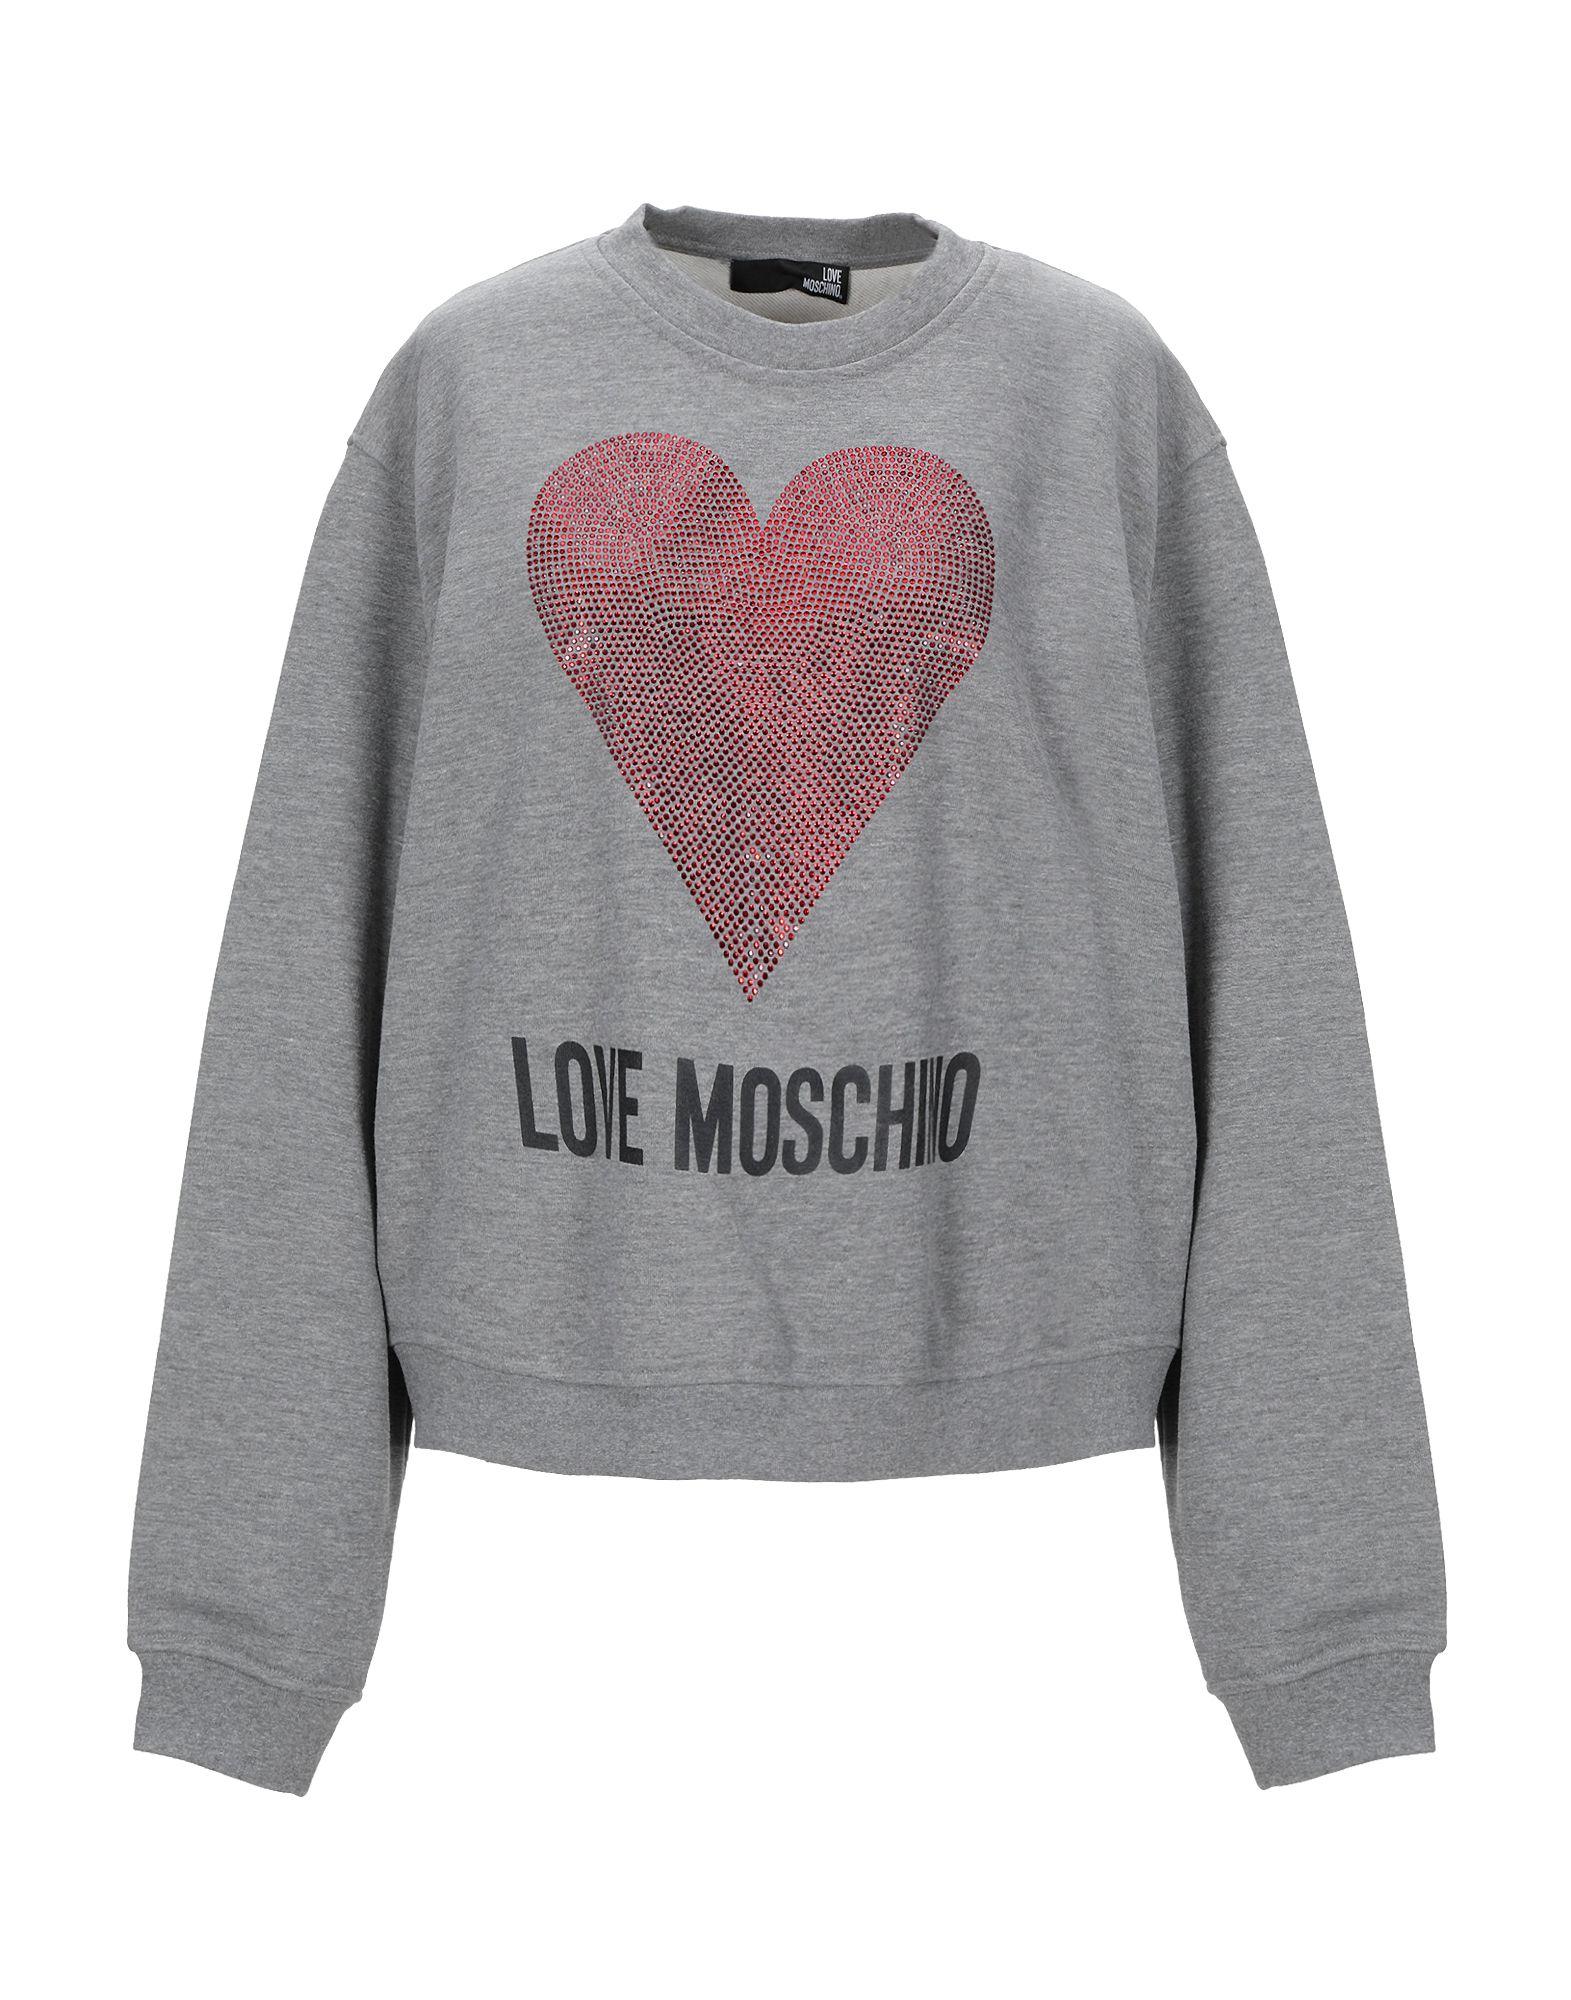 Love Moschino Cotton Sweatshirt in Grey (Gray) - Lyst